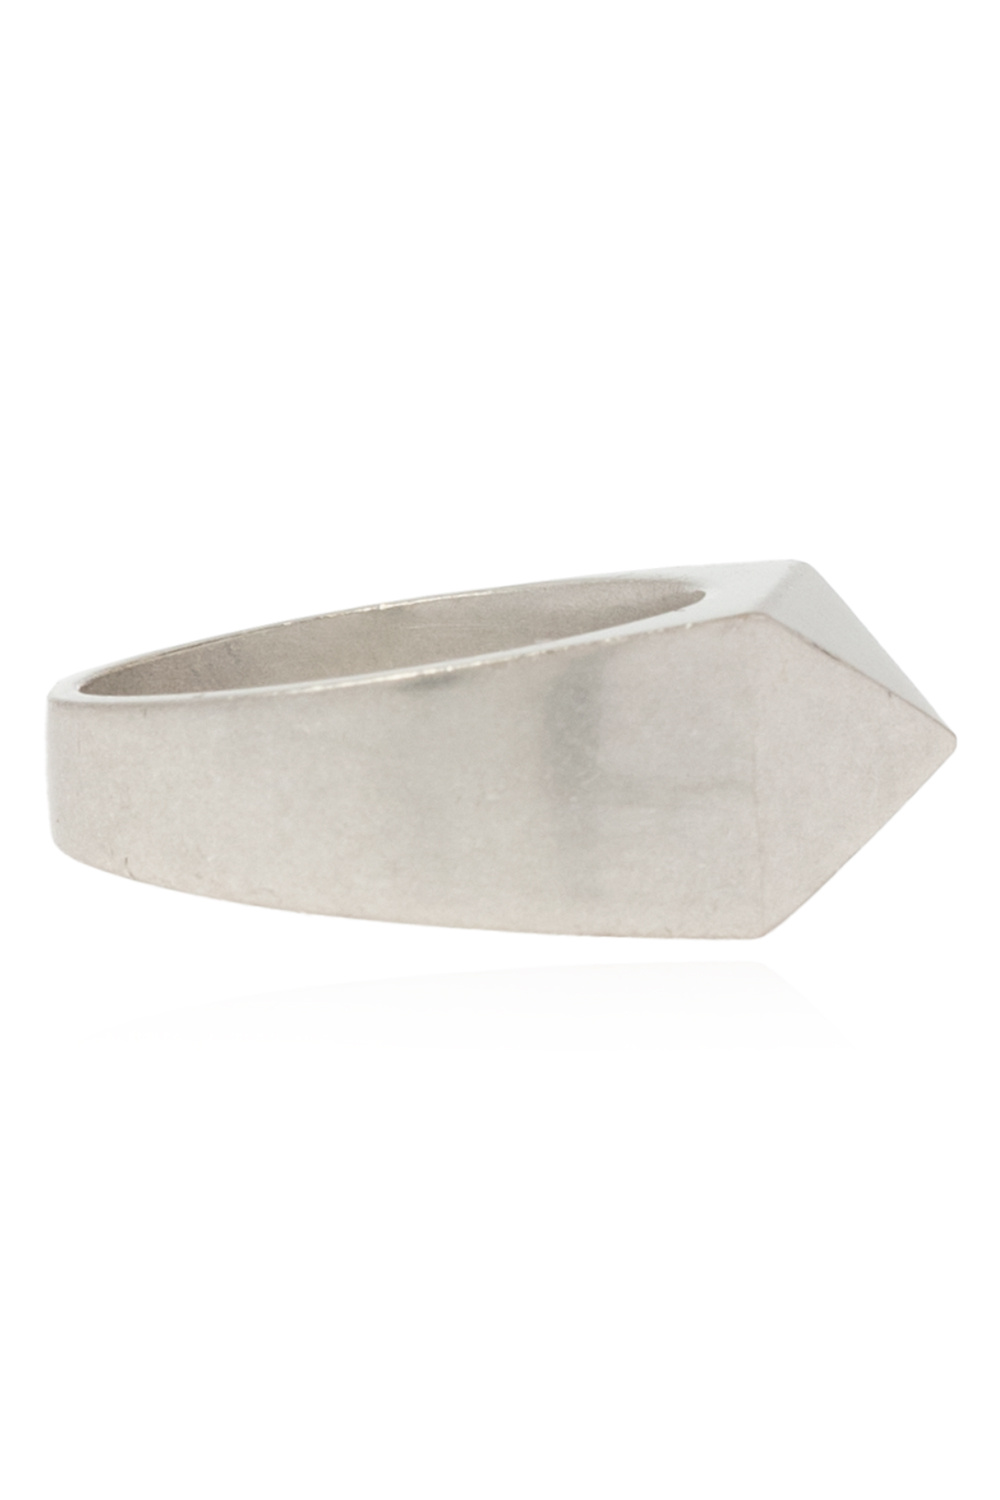 AllSaints ‘Imai’ silver signet ring